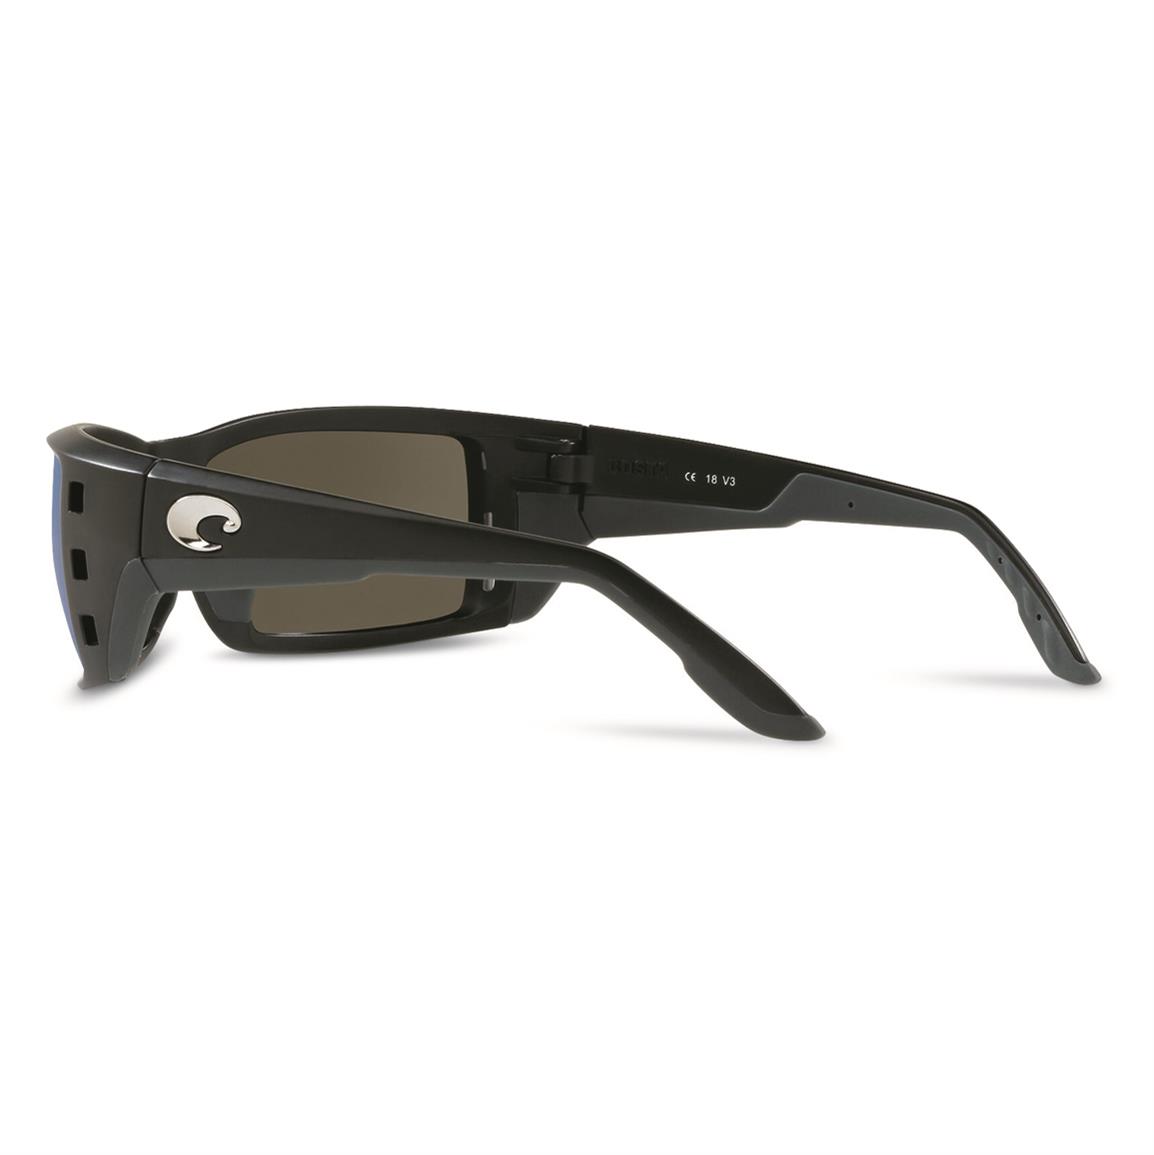 Huk Men's Challenge Polarized Sunglasses - 730832, Sunglasses